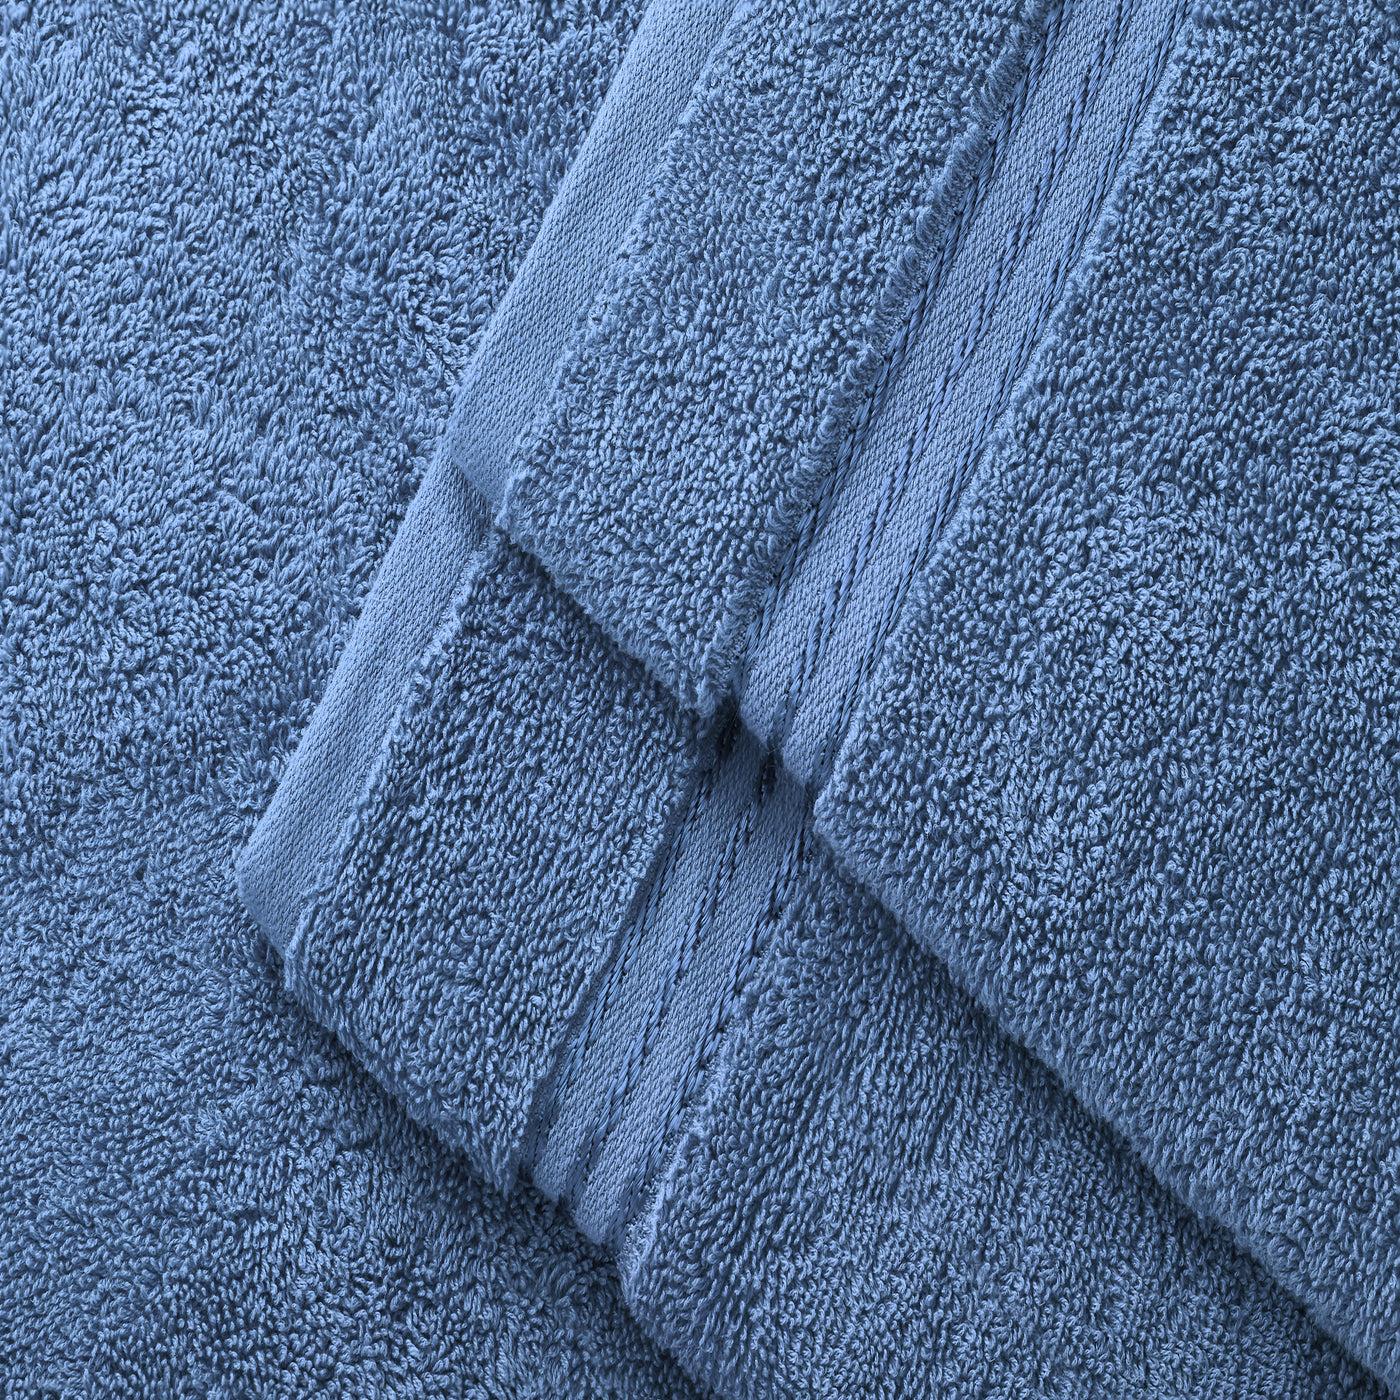 Plush Towel - 6pc Set - 2 x Bath _ 2 x Hand _ 2 x Face _Light Blue